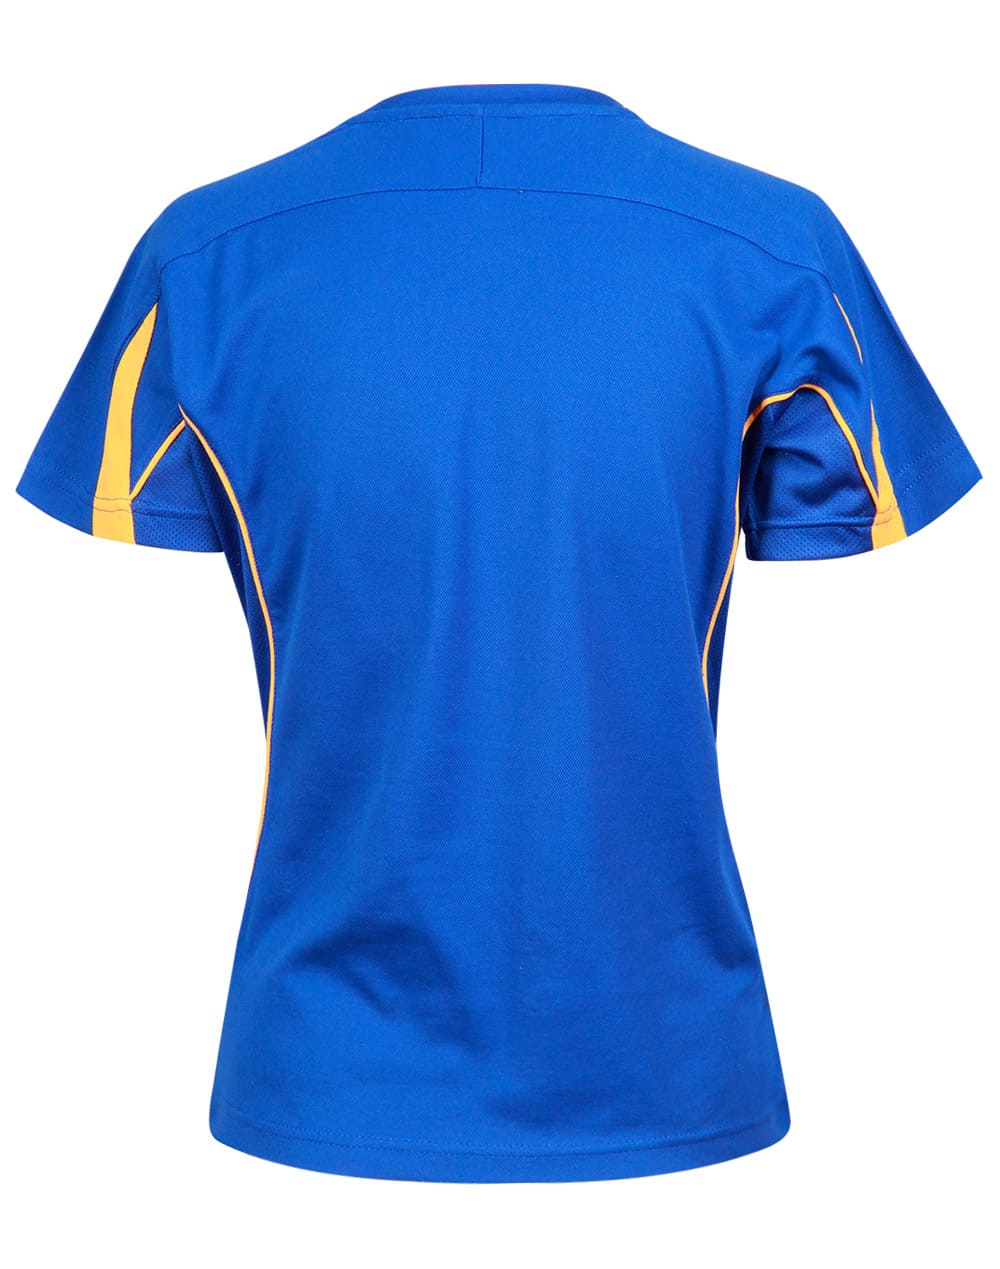 Custom Made (Navy Aqua Blue) Legend Ladies Short Sleeve Tee Shirts Online in Perth